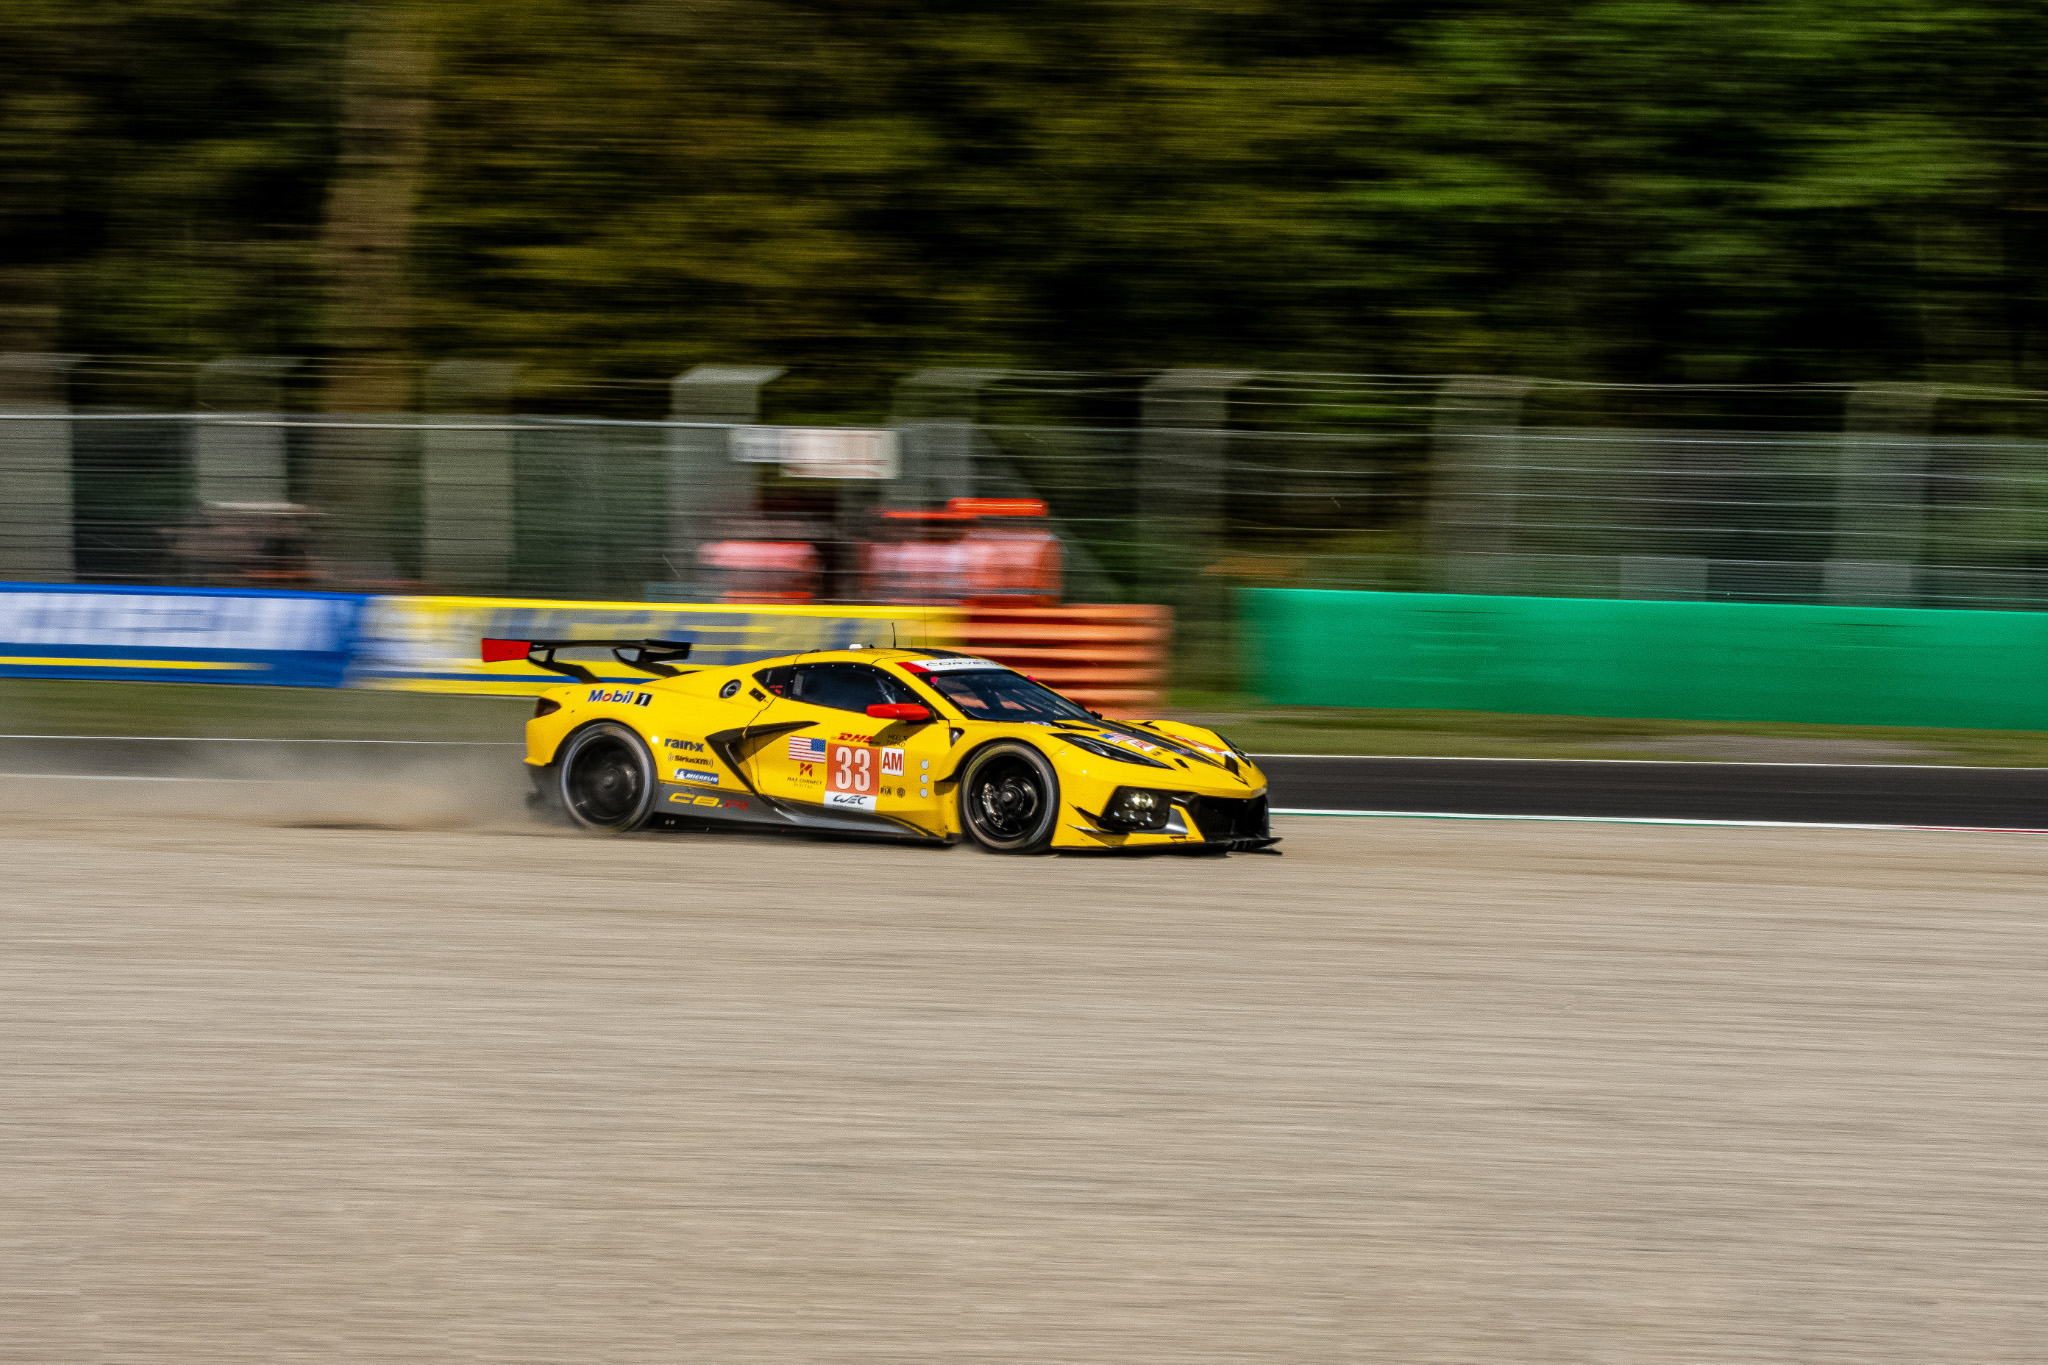 Racetrackstudio_FIA_WEC_Monza_6H_Corvette_C8_LM